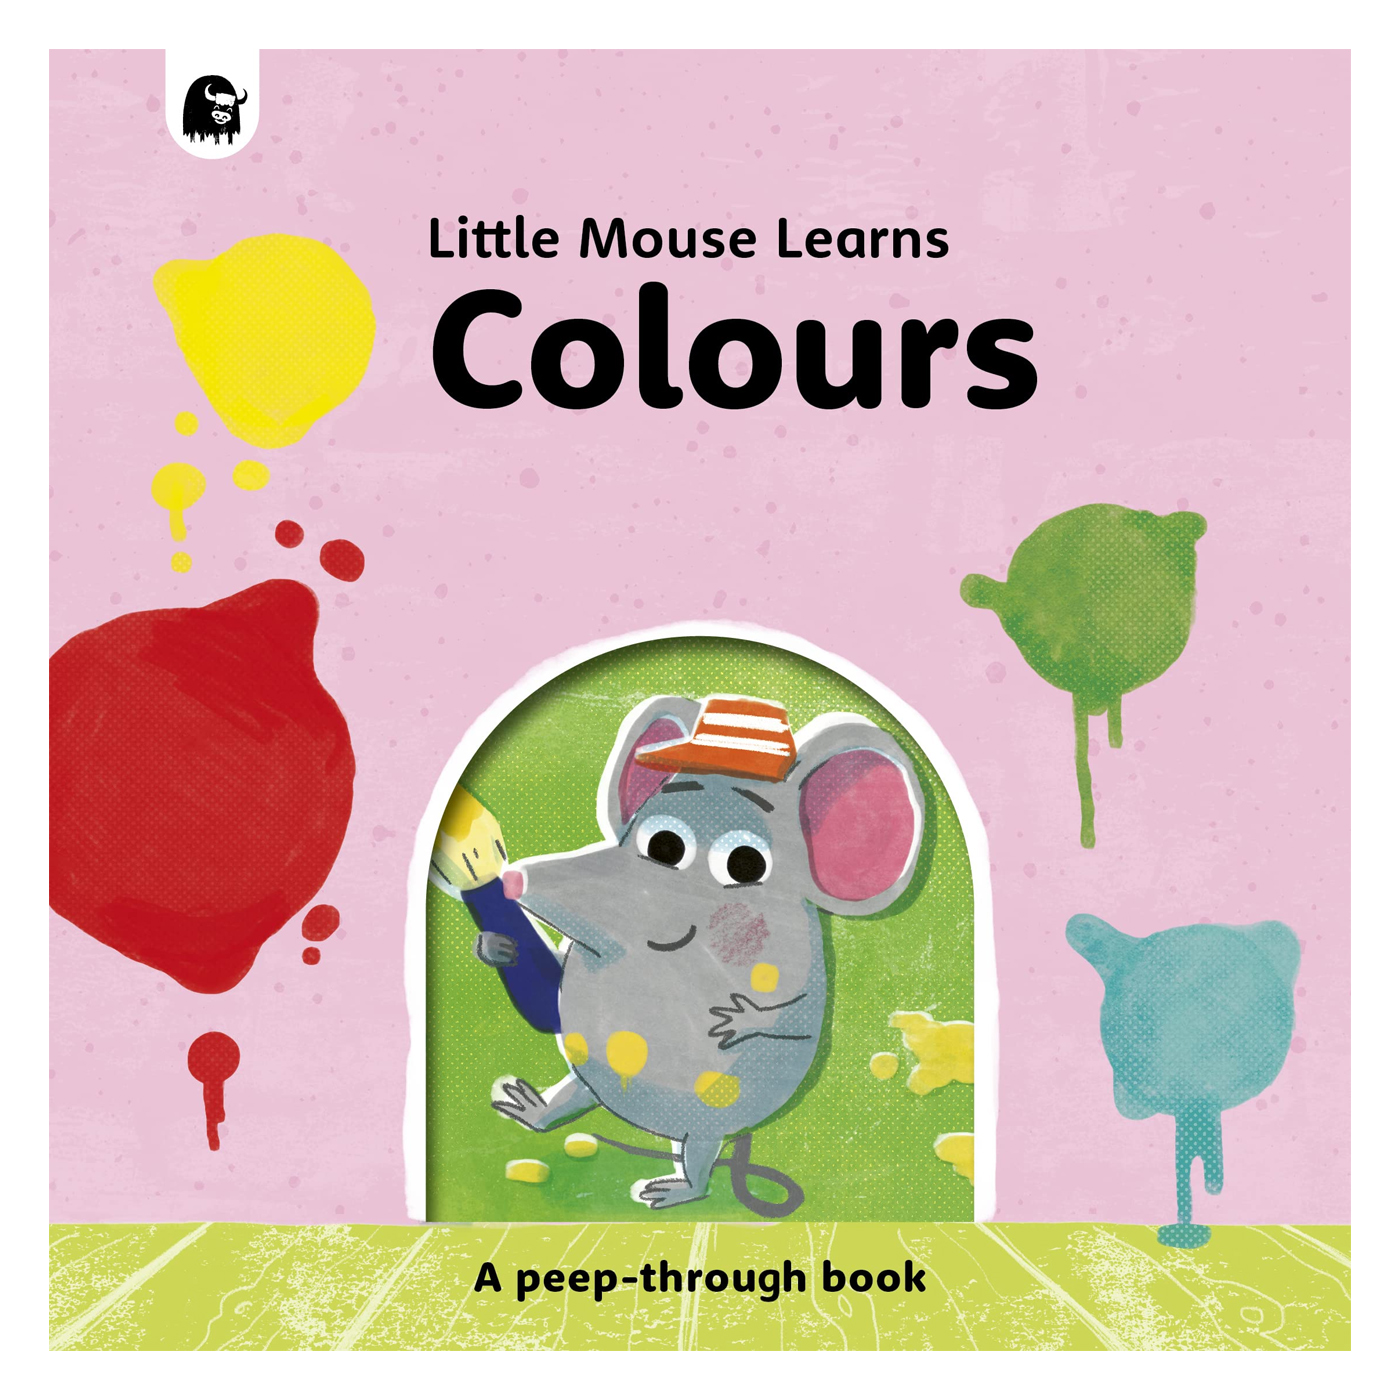  Little Mouse Learns Colours